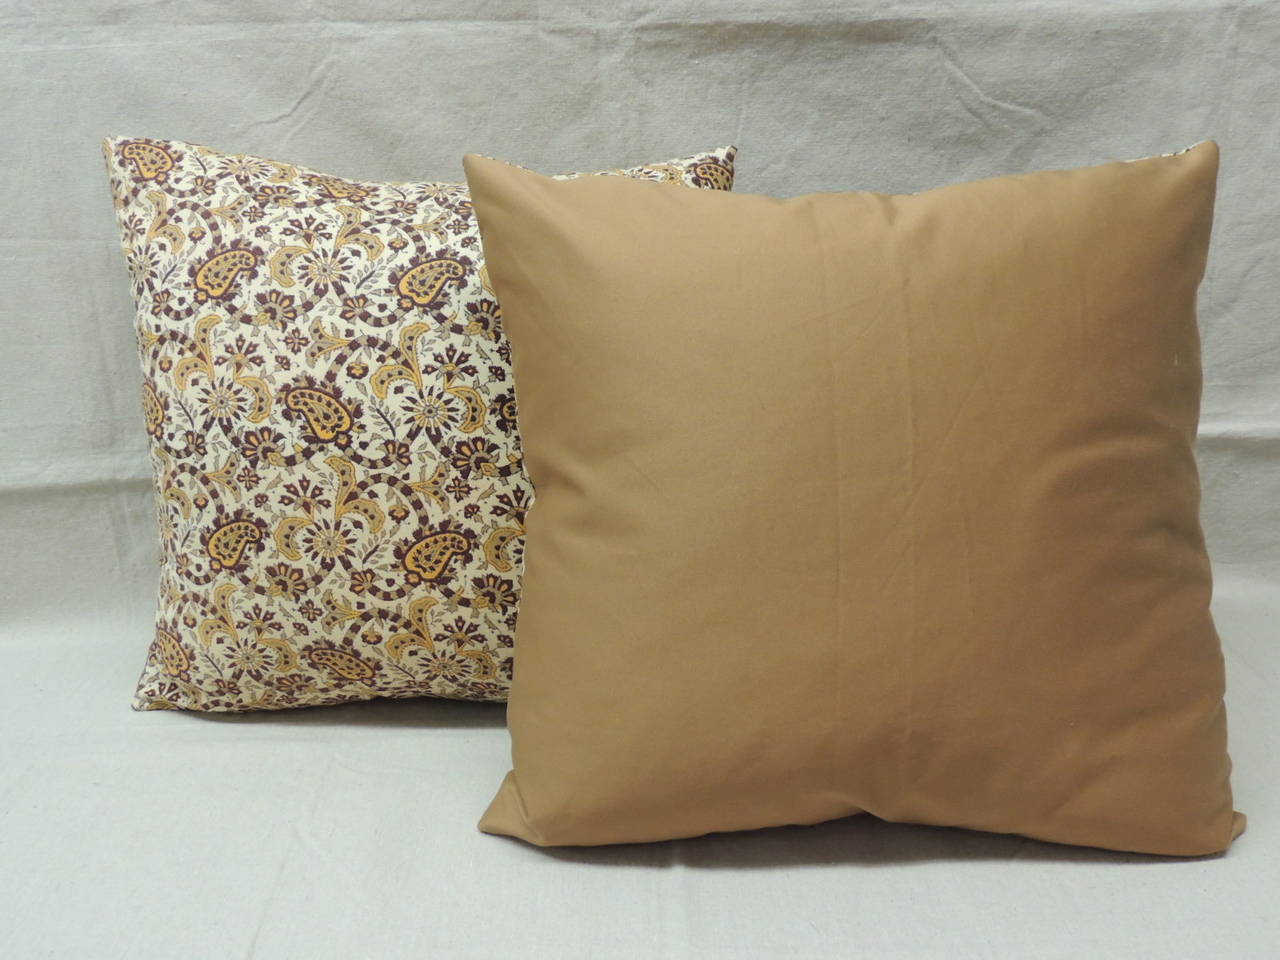 Hand-Crafted Pair of Yellow Paisley Indian Batik Decorative Pillows